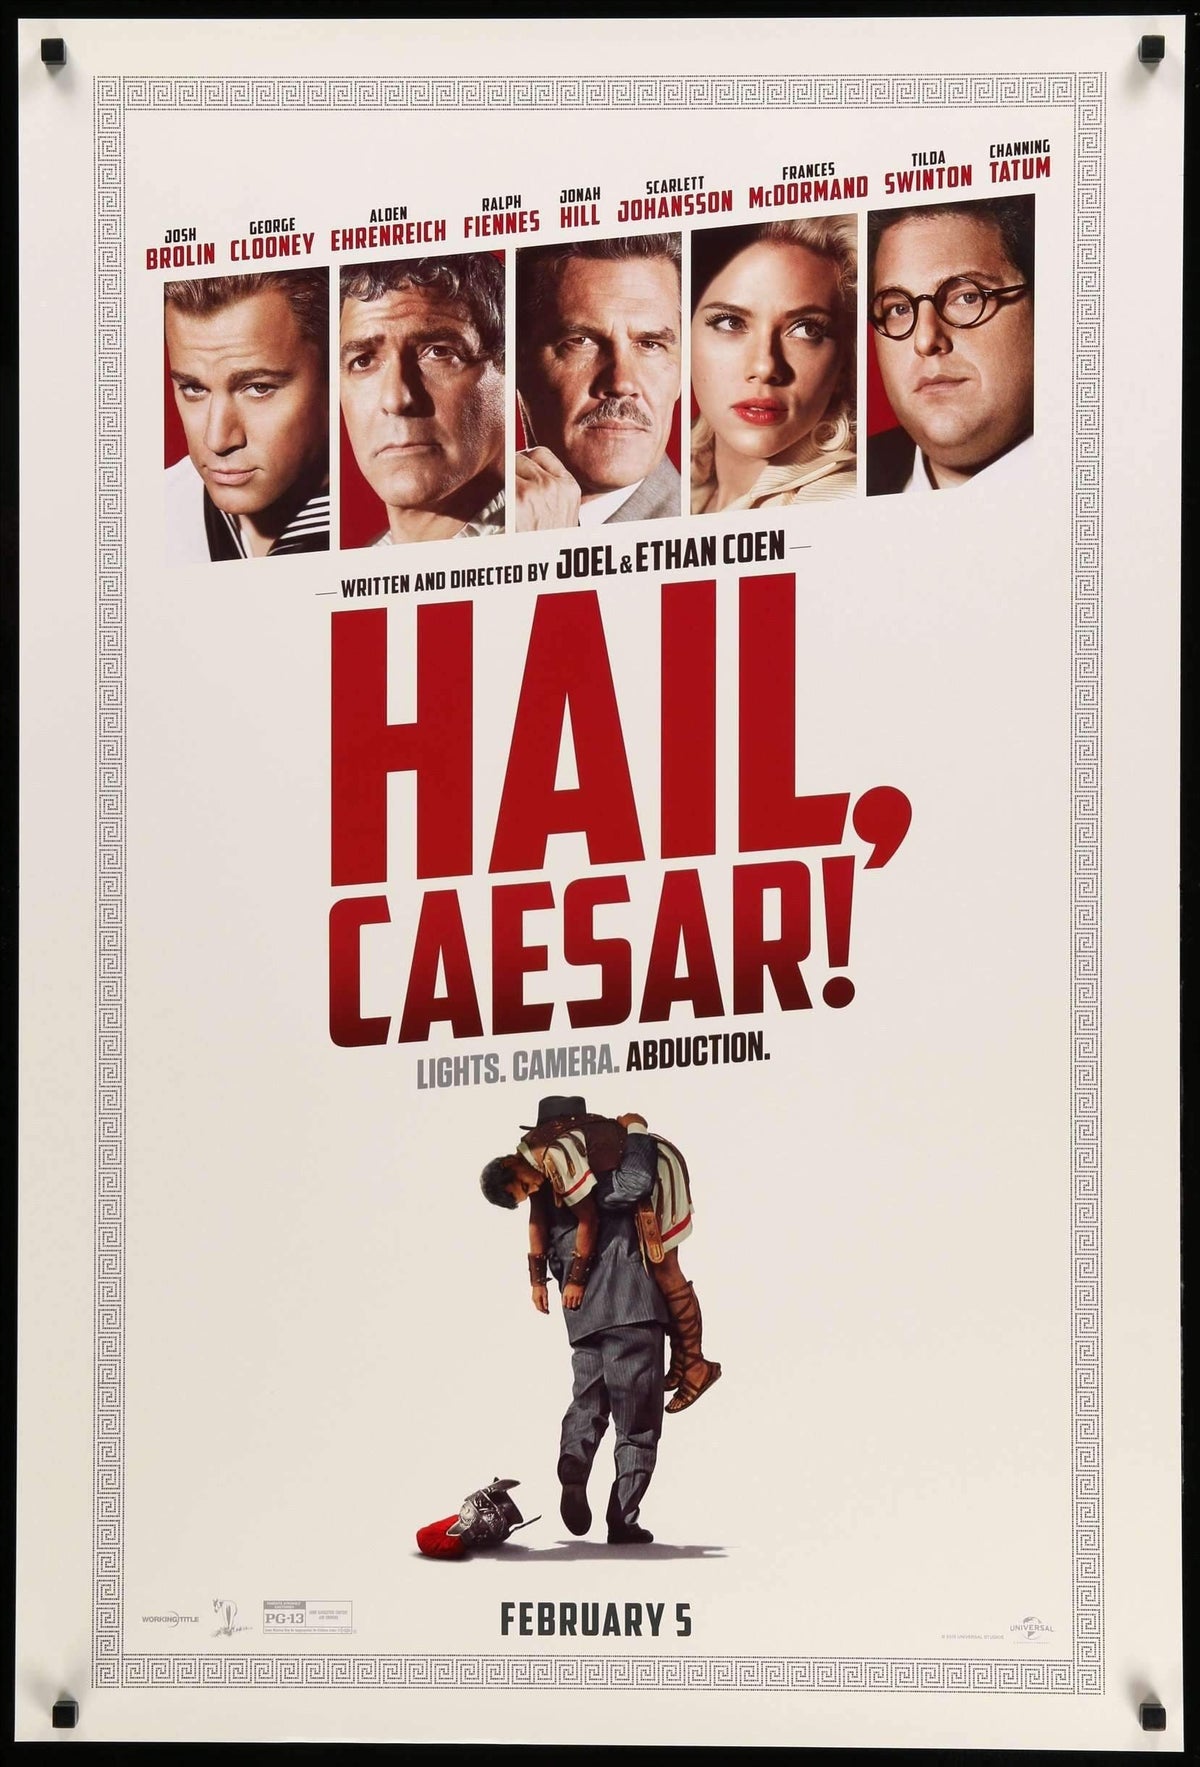 Hail, Caesar! (2016) original movie poster for sale at Original Film Art